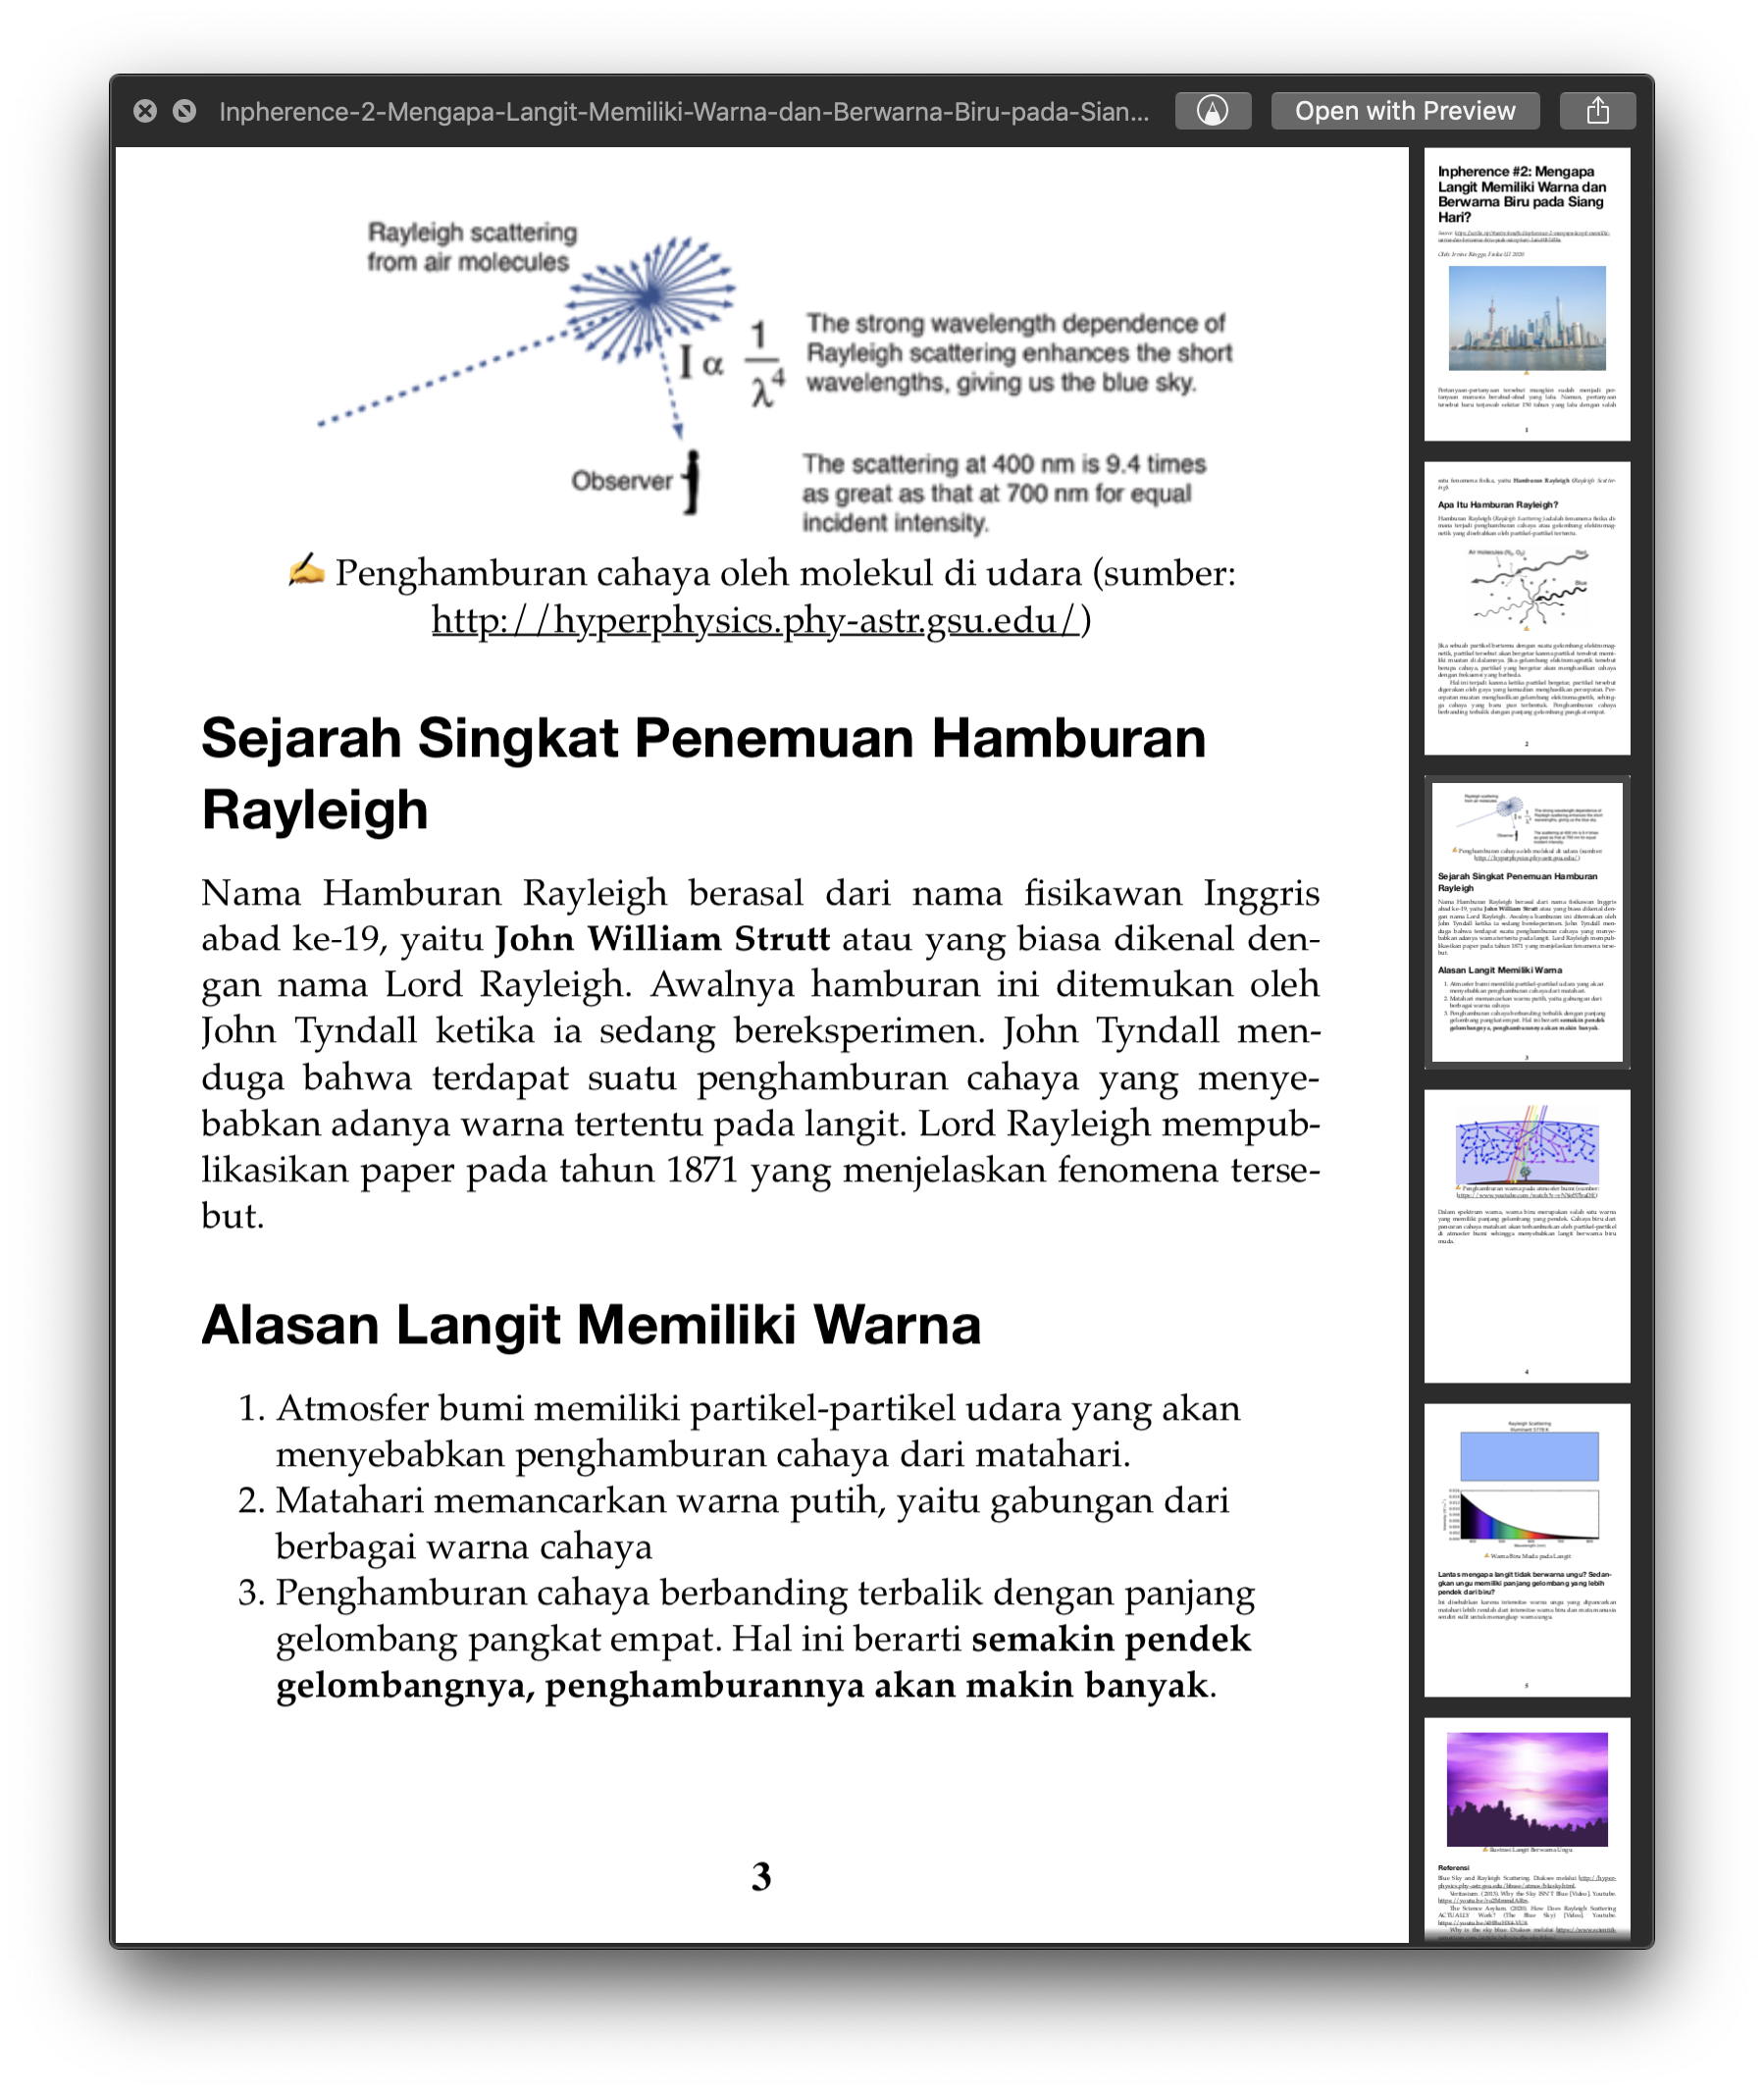 download medium articles as pdf